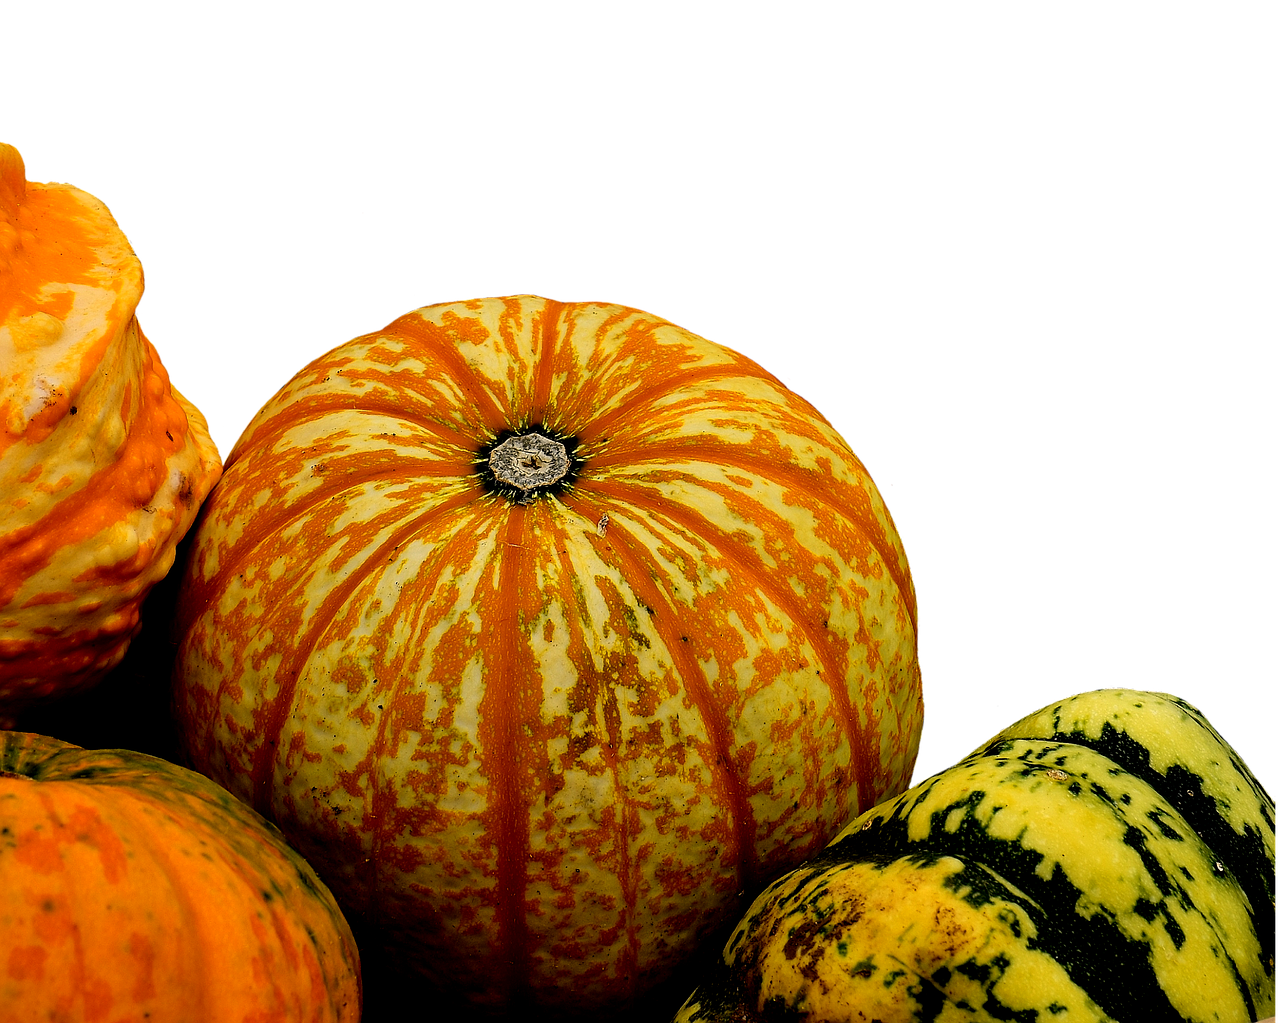 pumpkins decorative squashes nature free photo